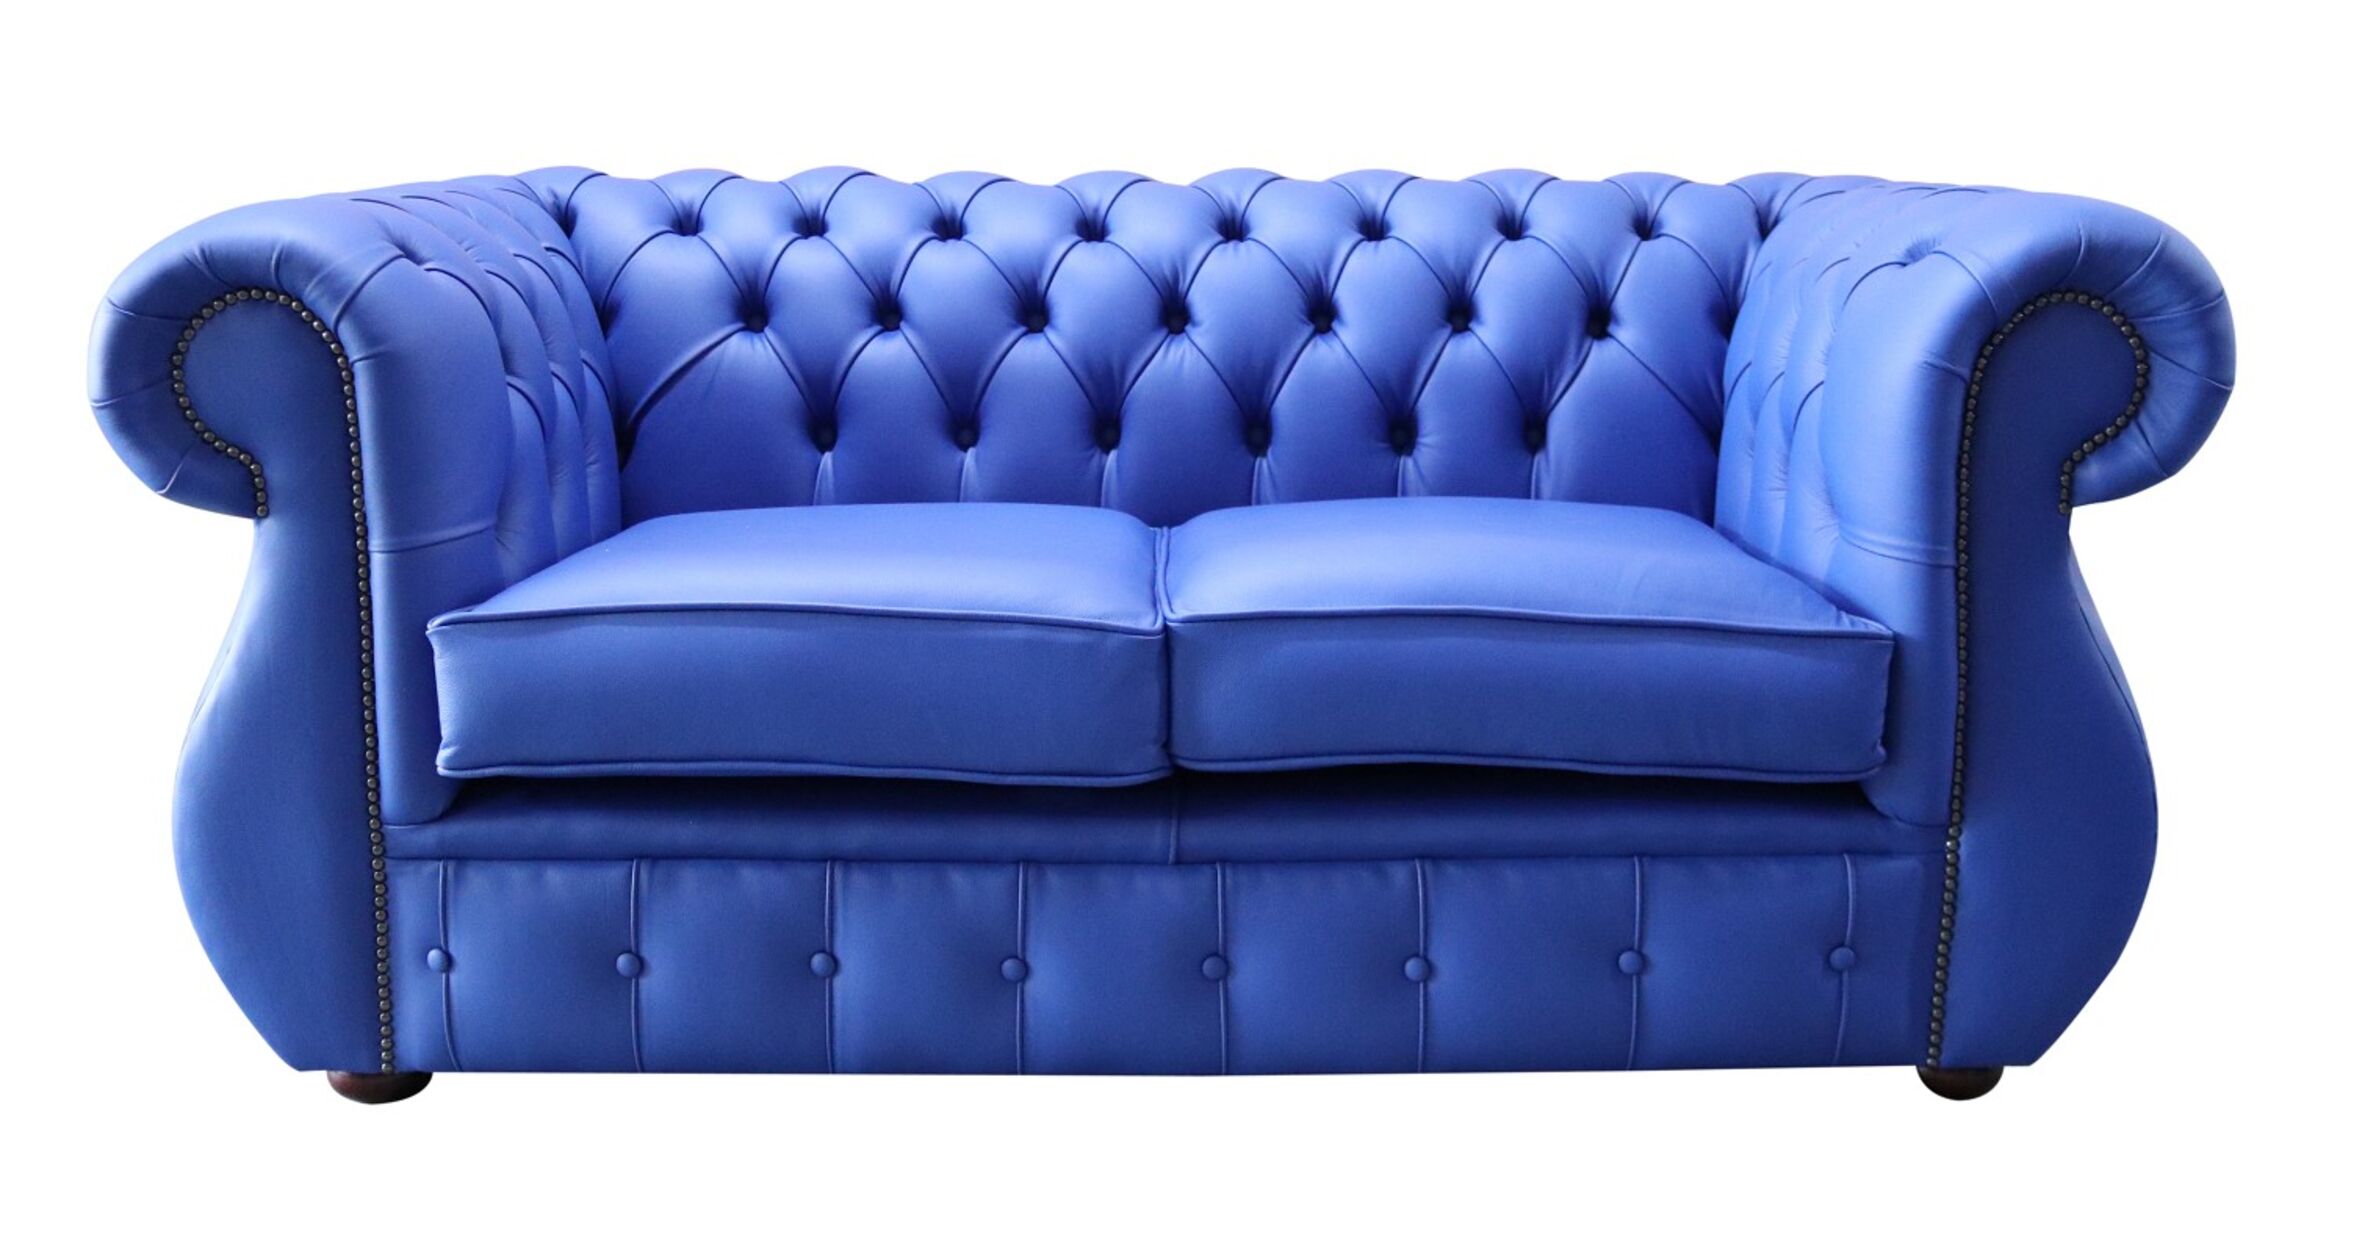 Chesterfield Kimberley Leather Sofa 2 Seater Blue (1188x630) ?v=de169e8a&mode=v